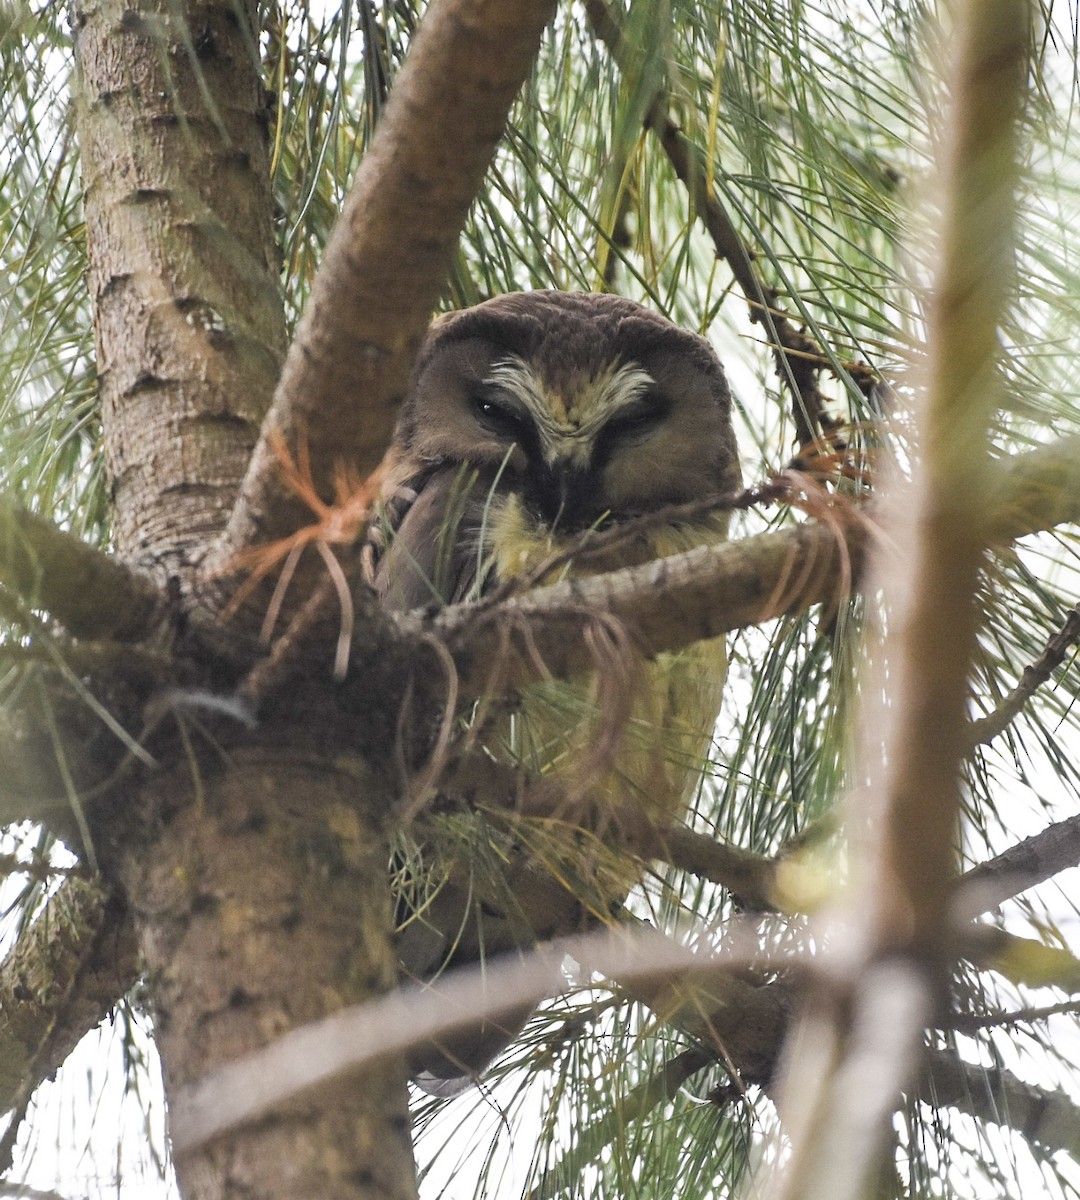 Unspotted Saw-whet Owl - Esteban Matías (birding guide) Sierra de los Cuchumatanes Huehuetenango esteban.matias@hotmail.com                             +502 53810540